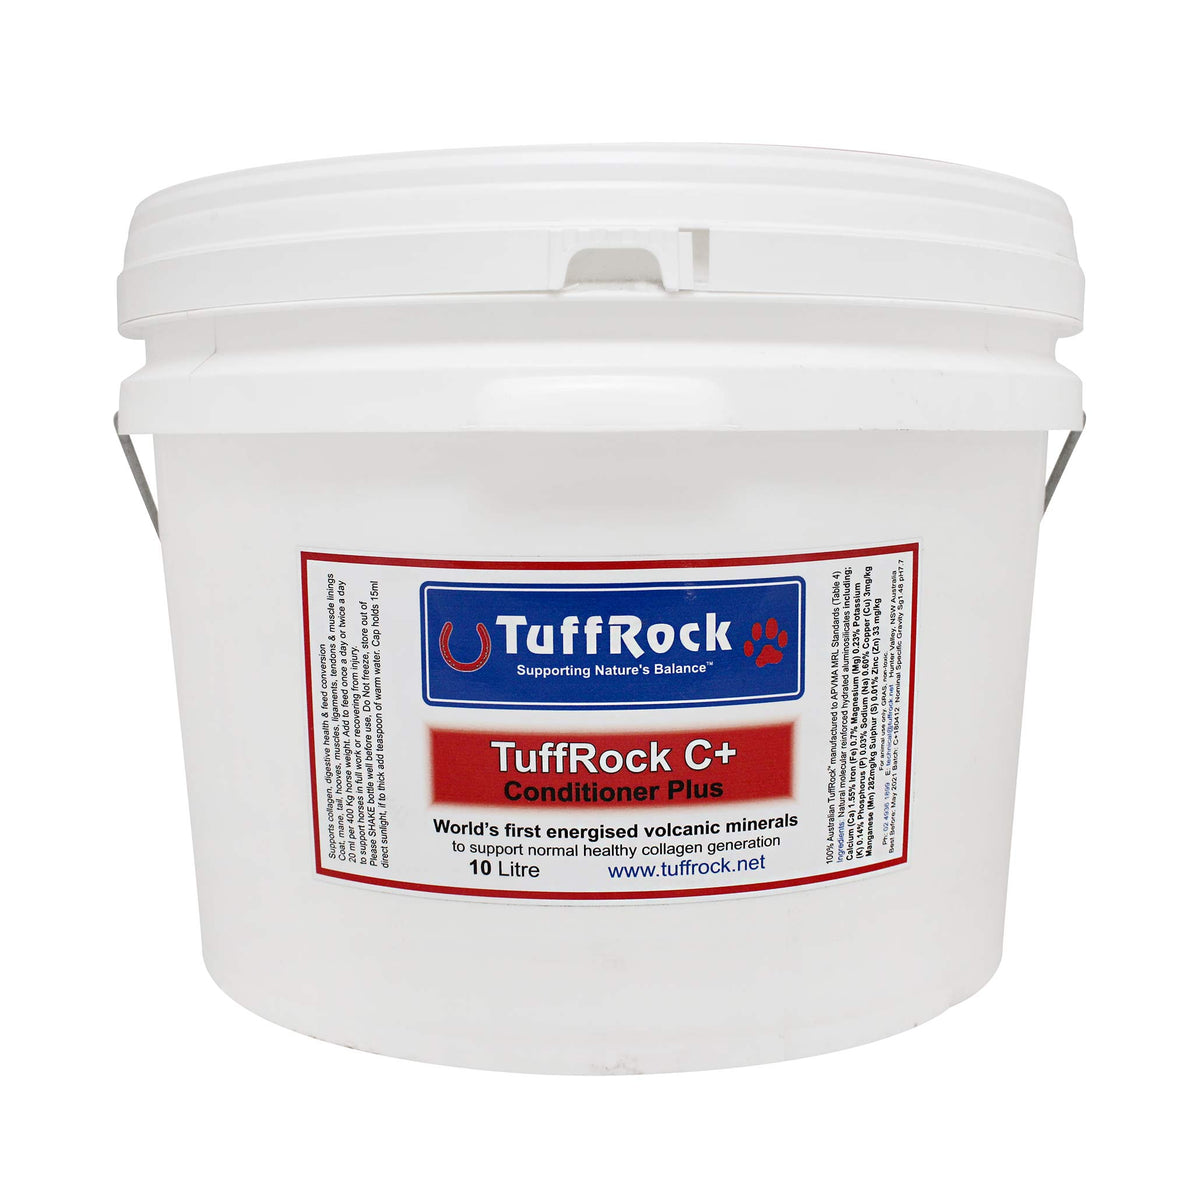 TuffRock Conditioner Plus